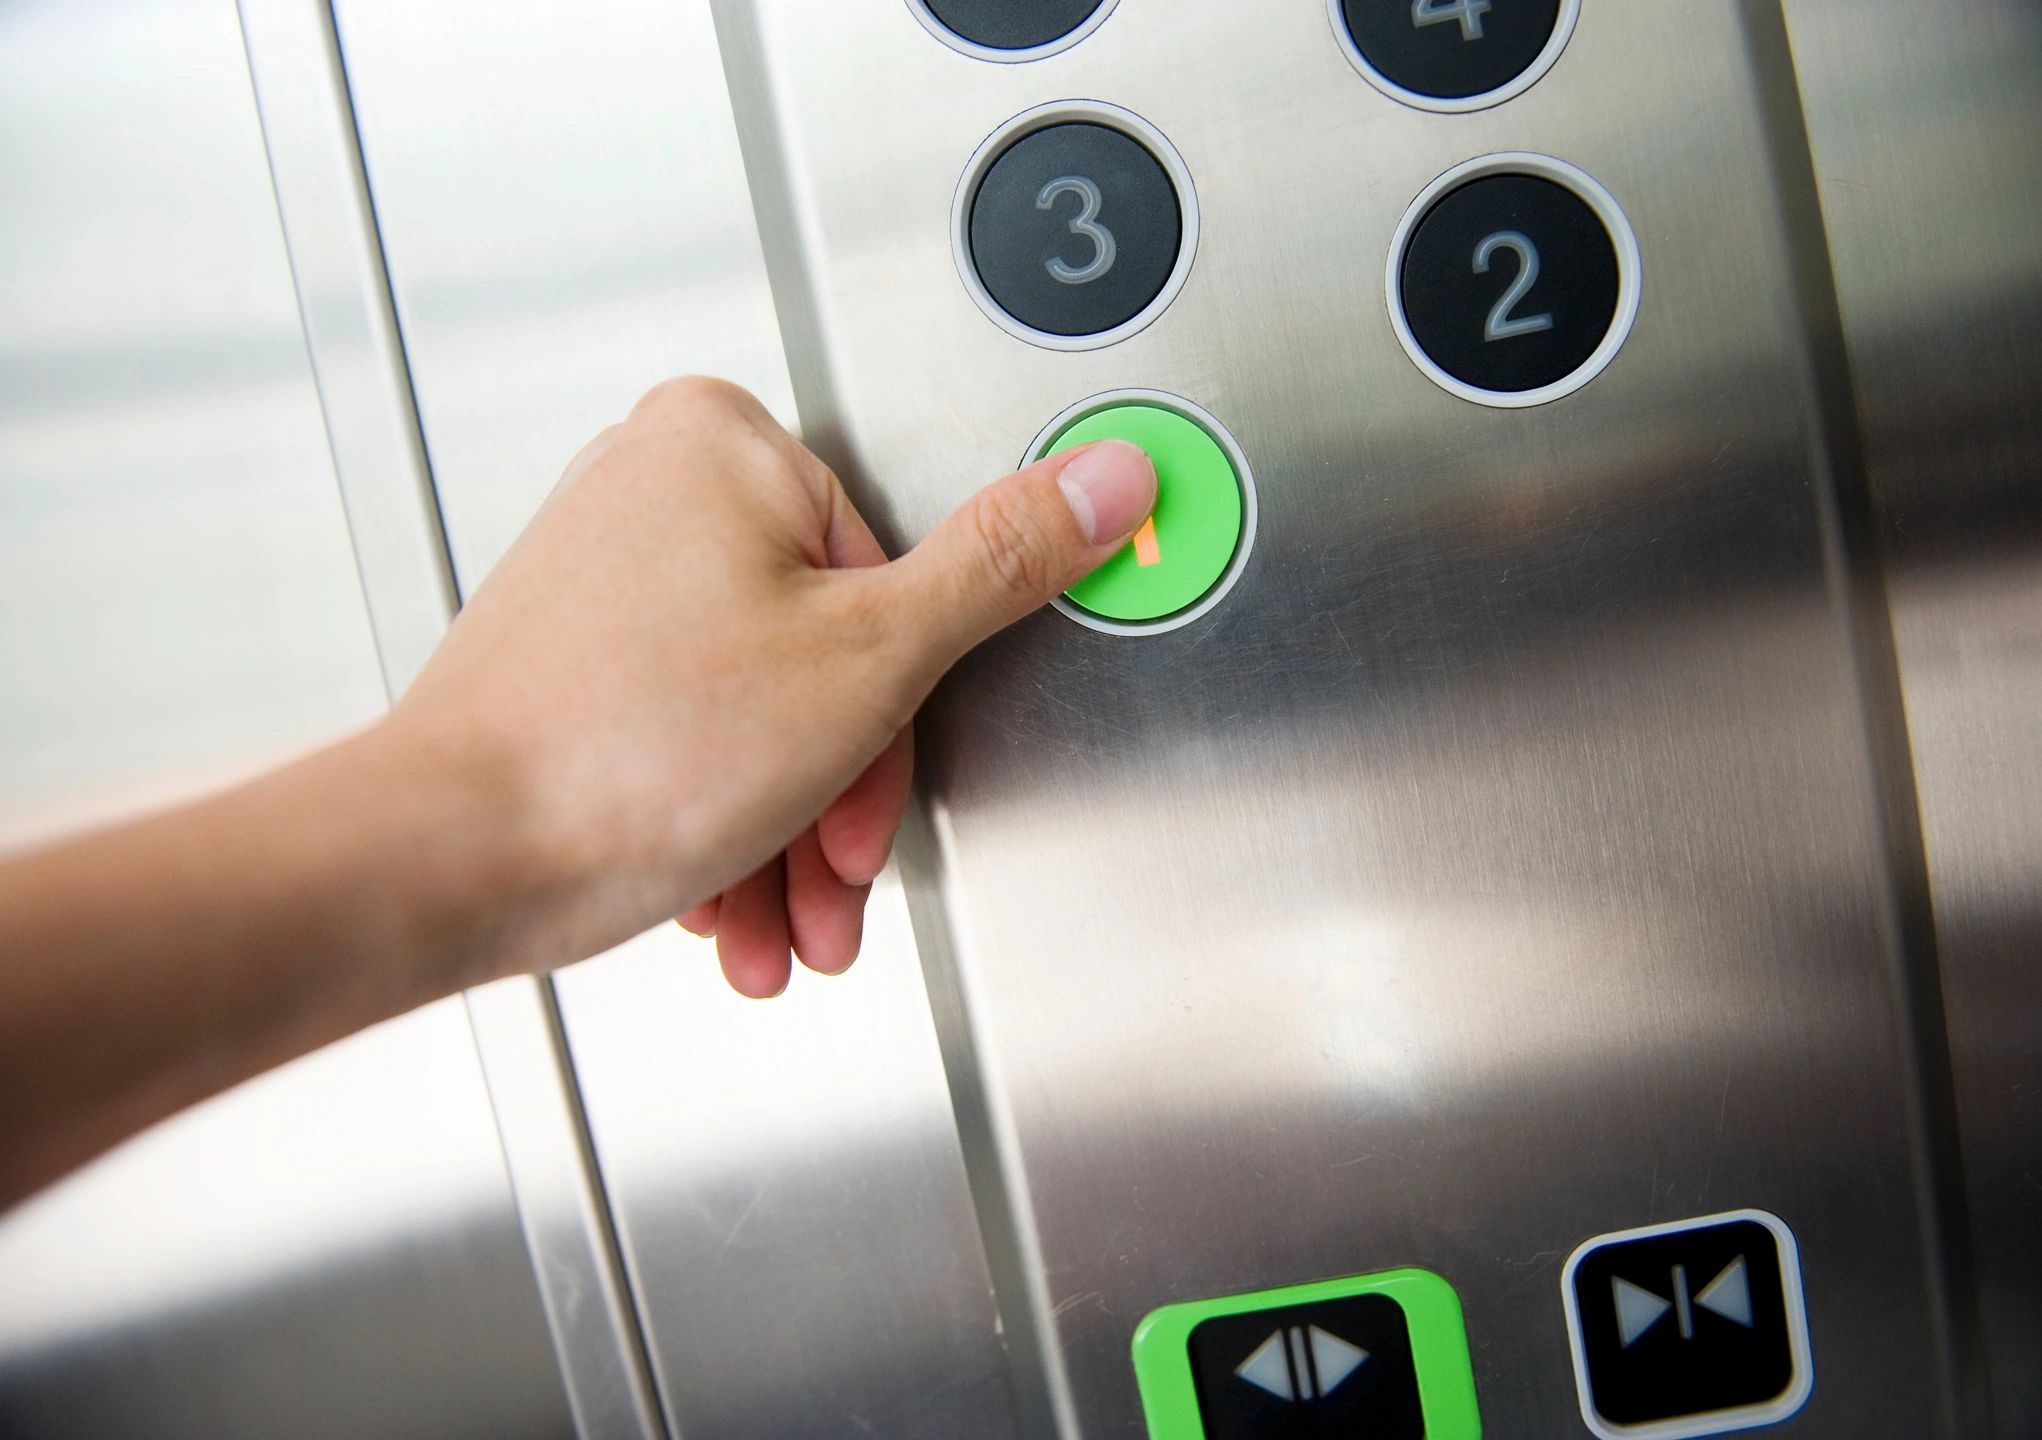 A finger pressing an elevator button